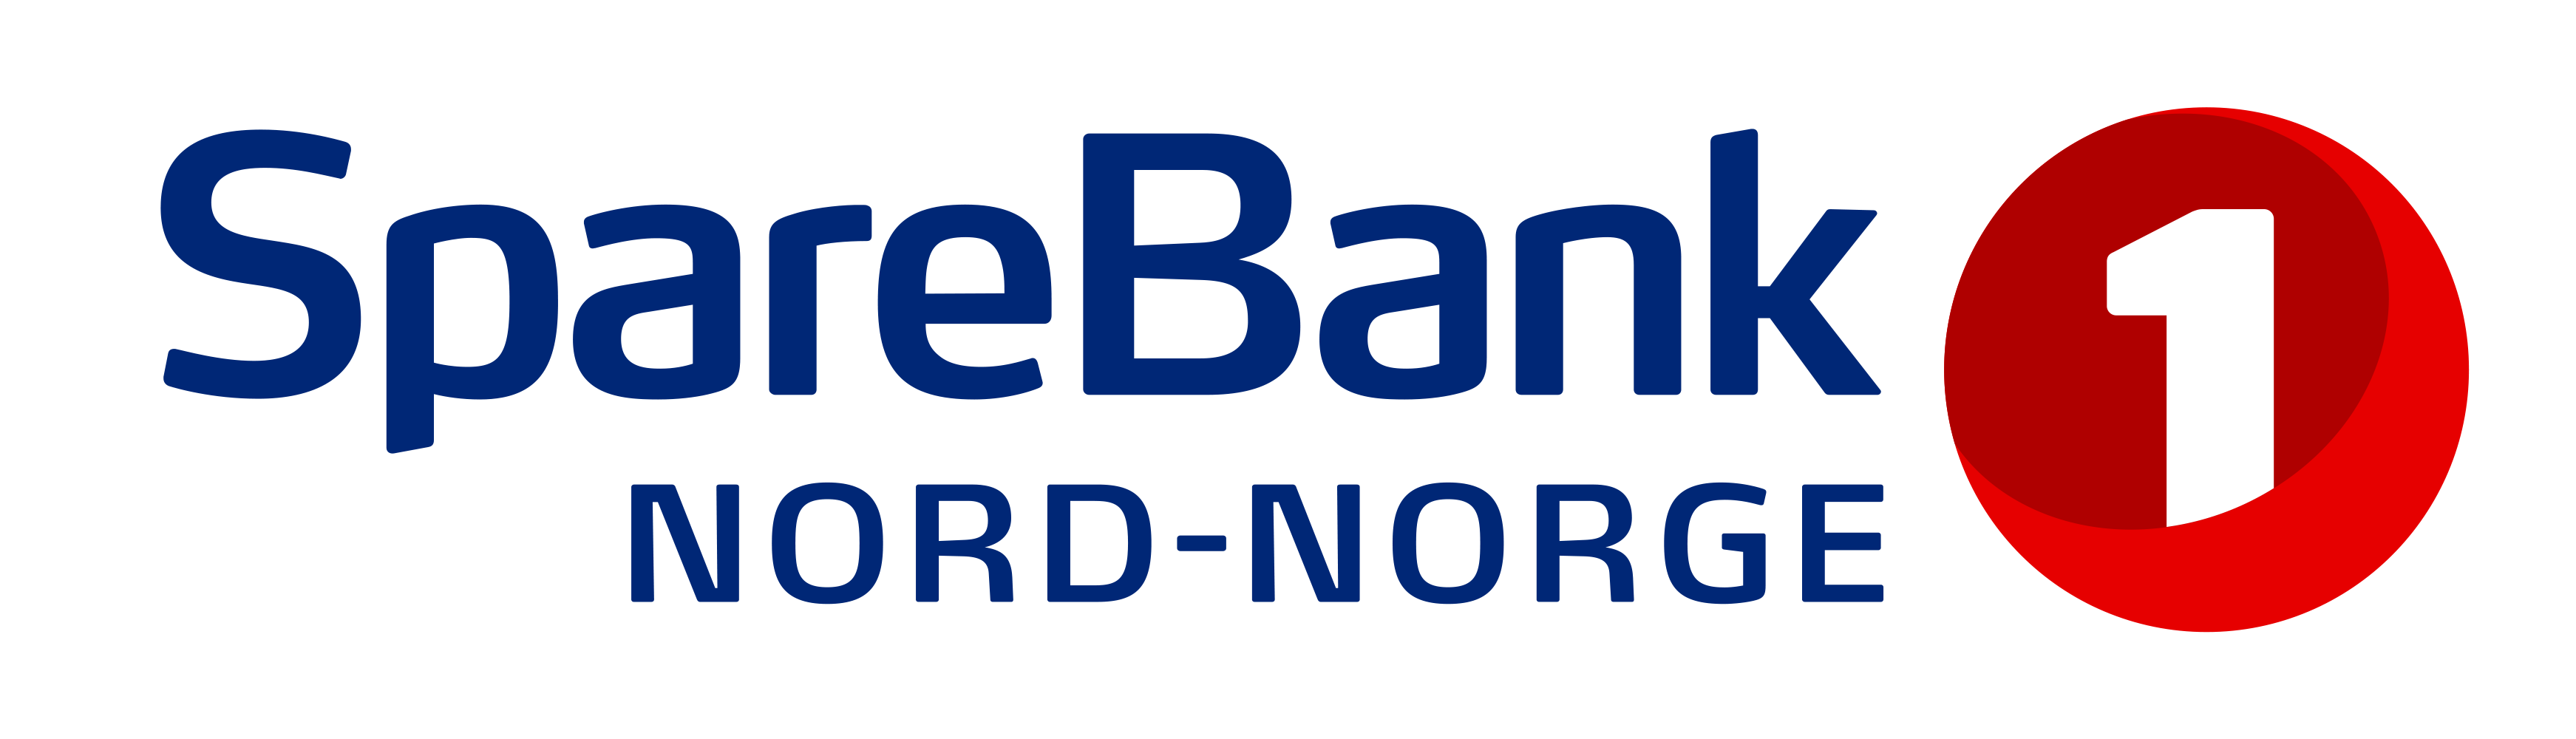 SPAREBANK 1 NORD-NORGE Brand Logo